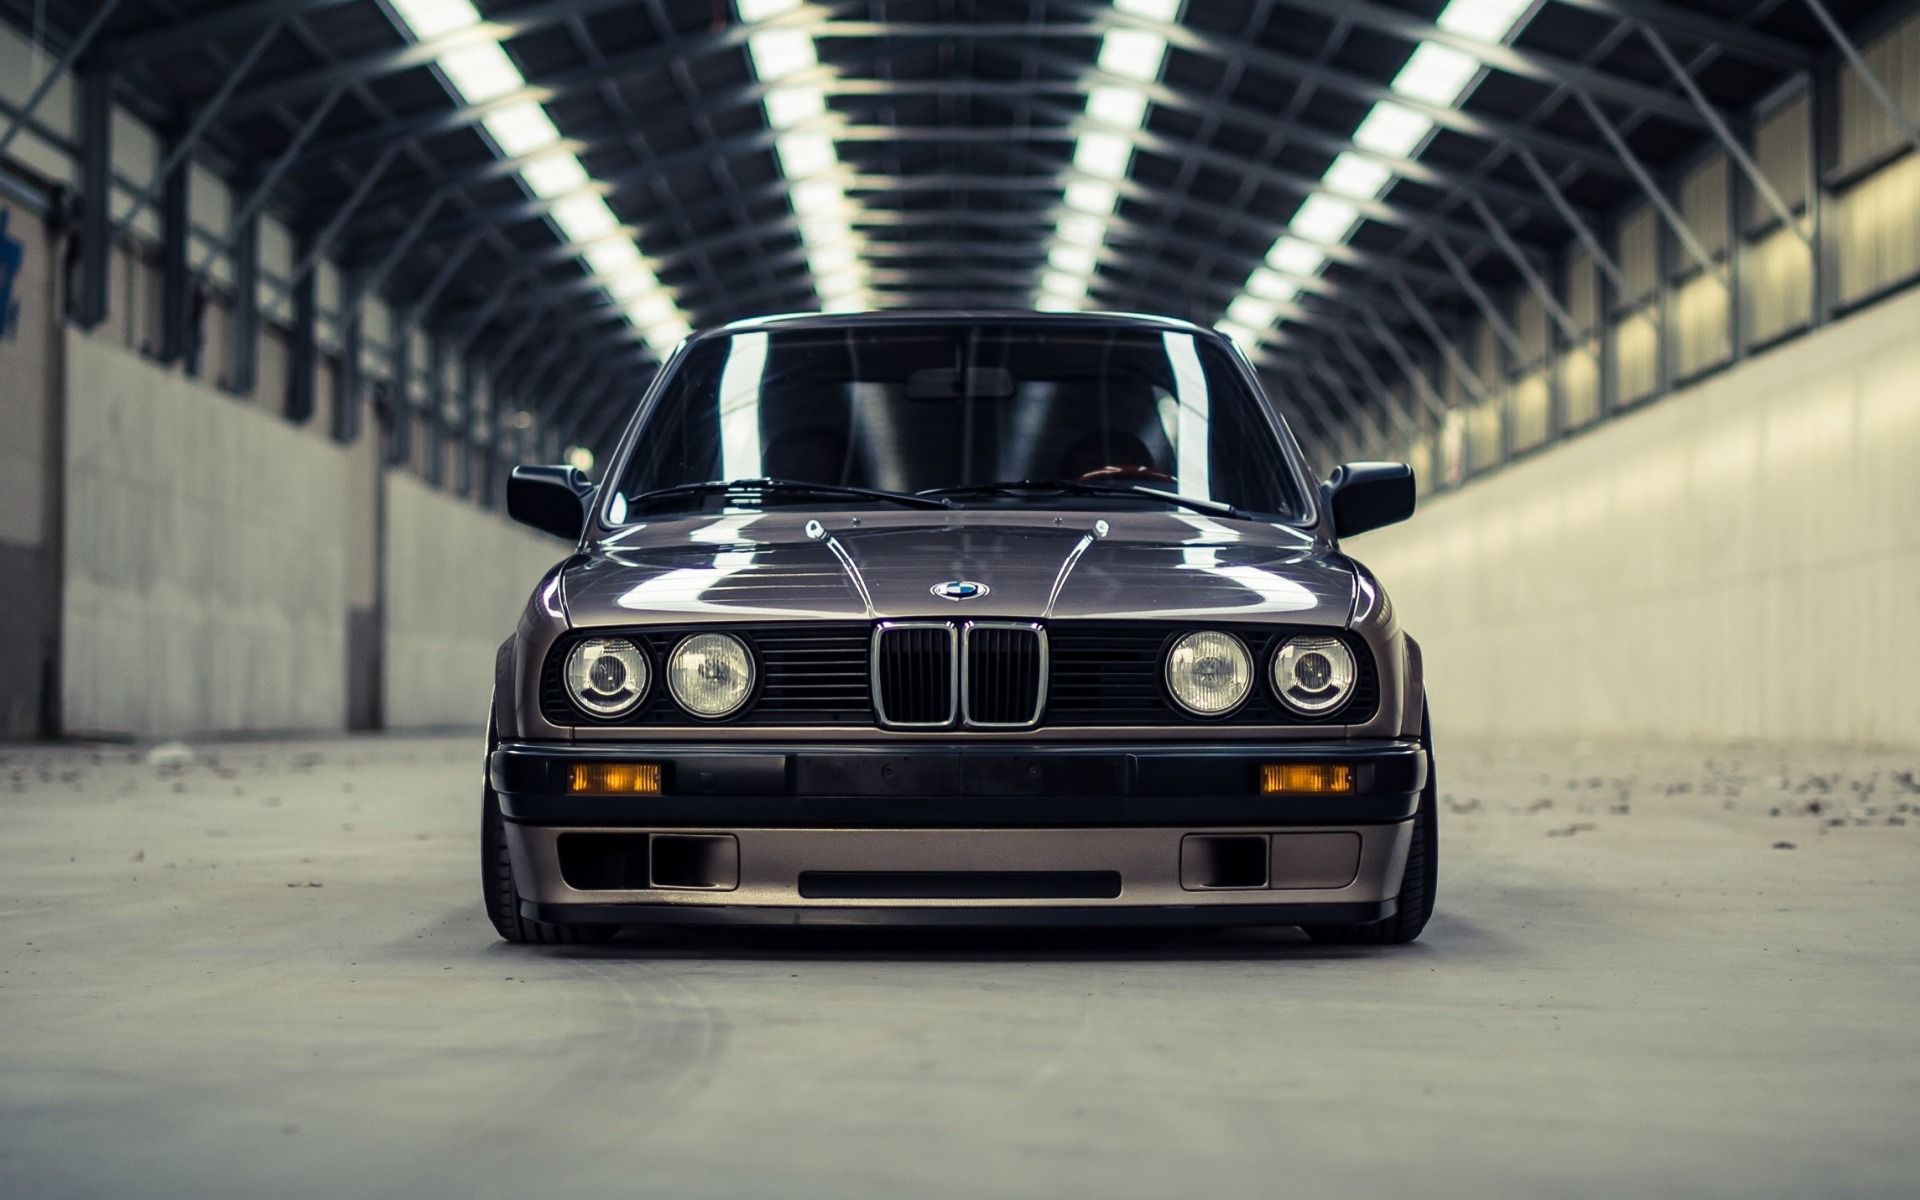 Download wallpaper BMW E classic cars, tuning E30